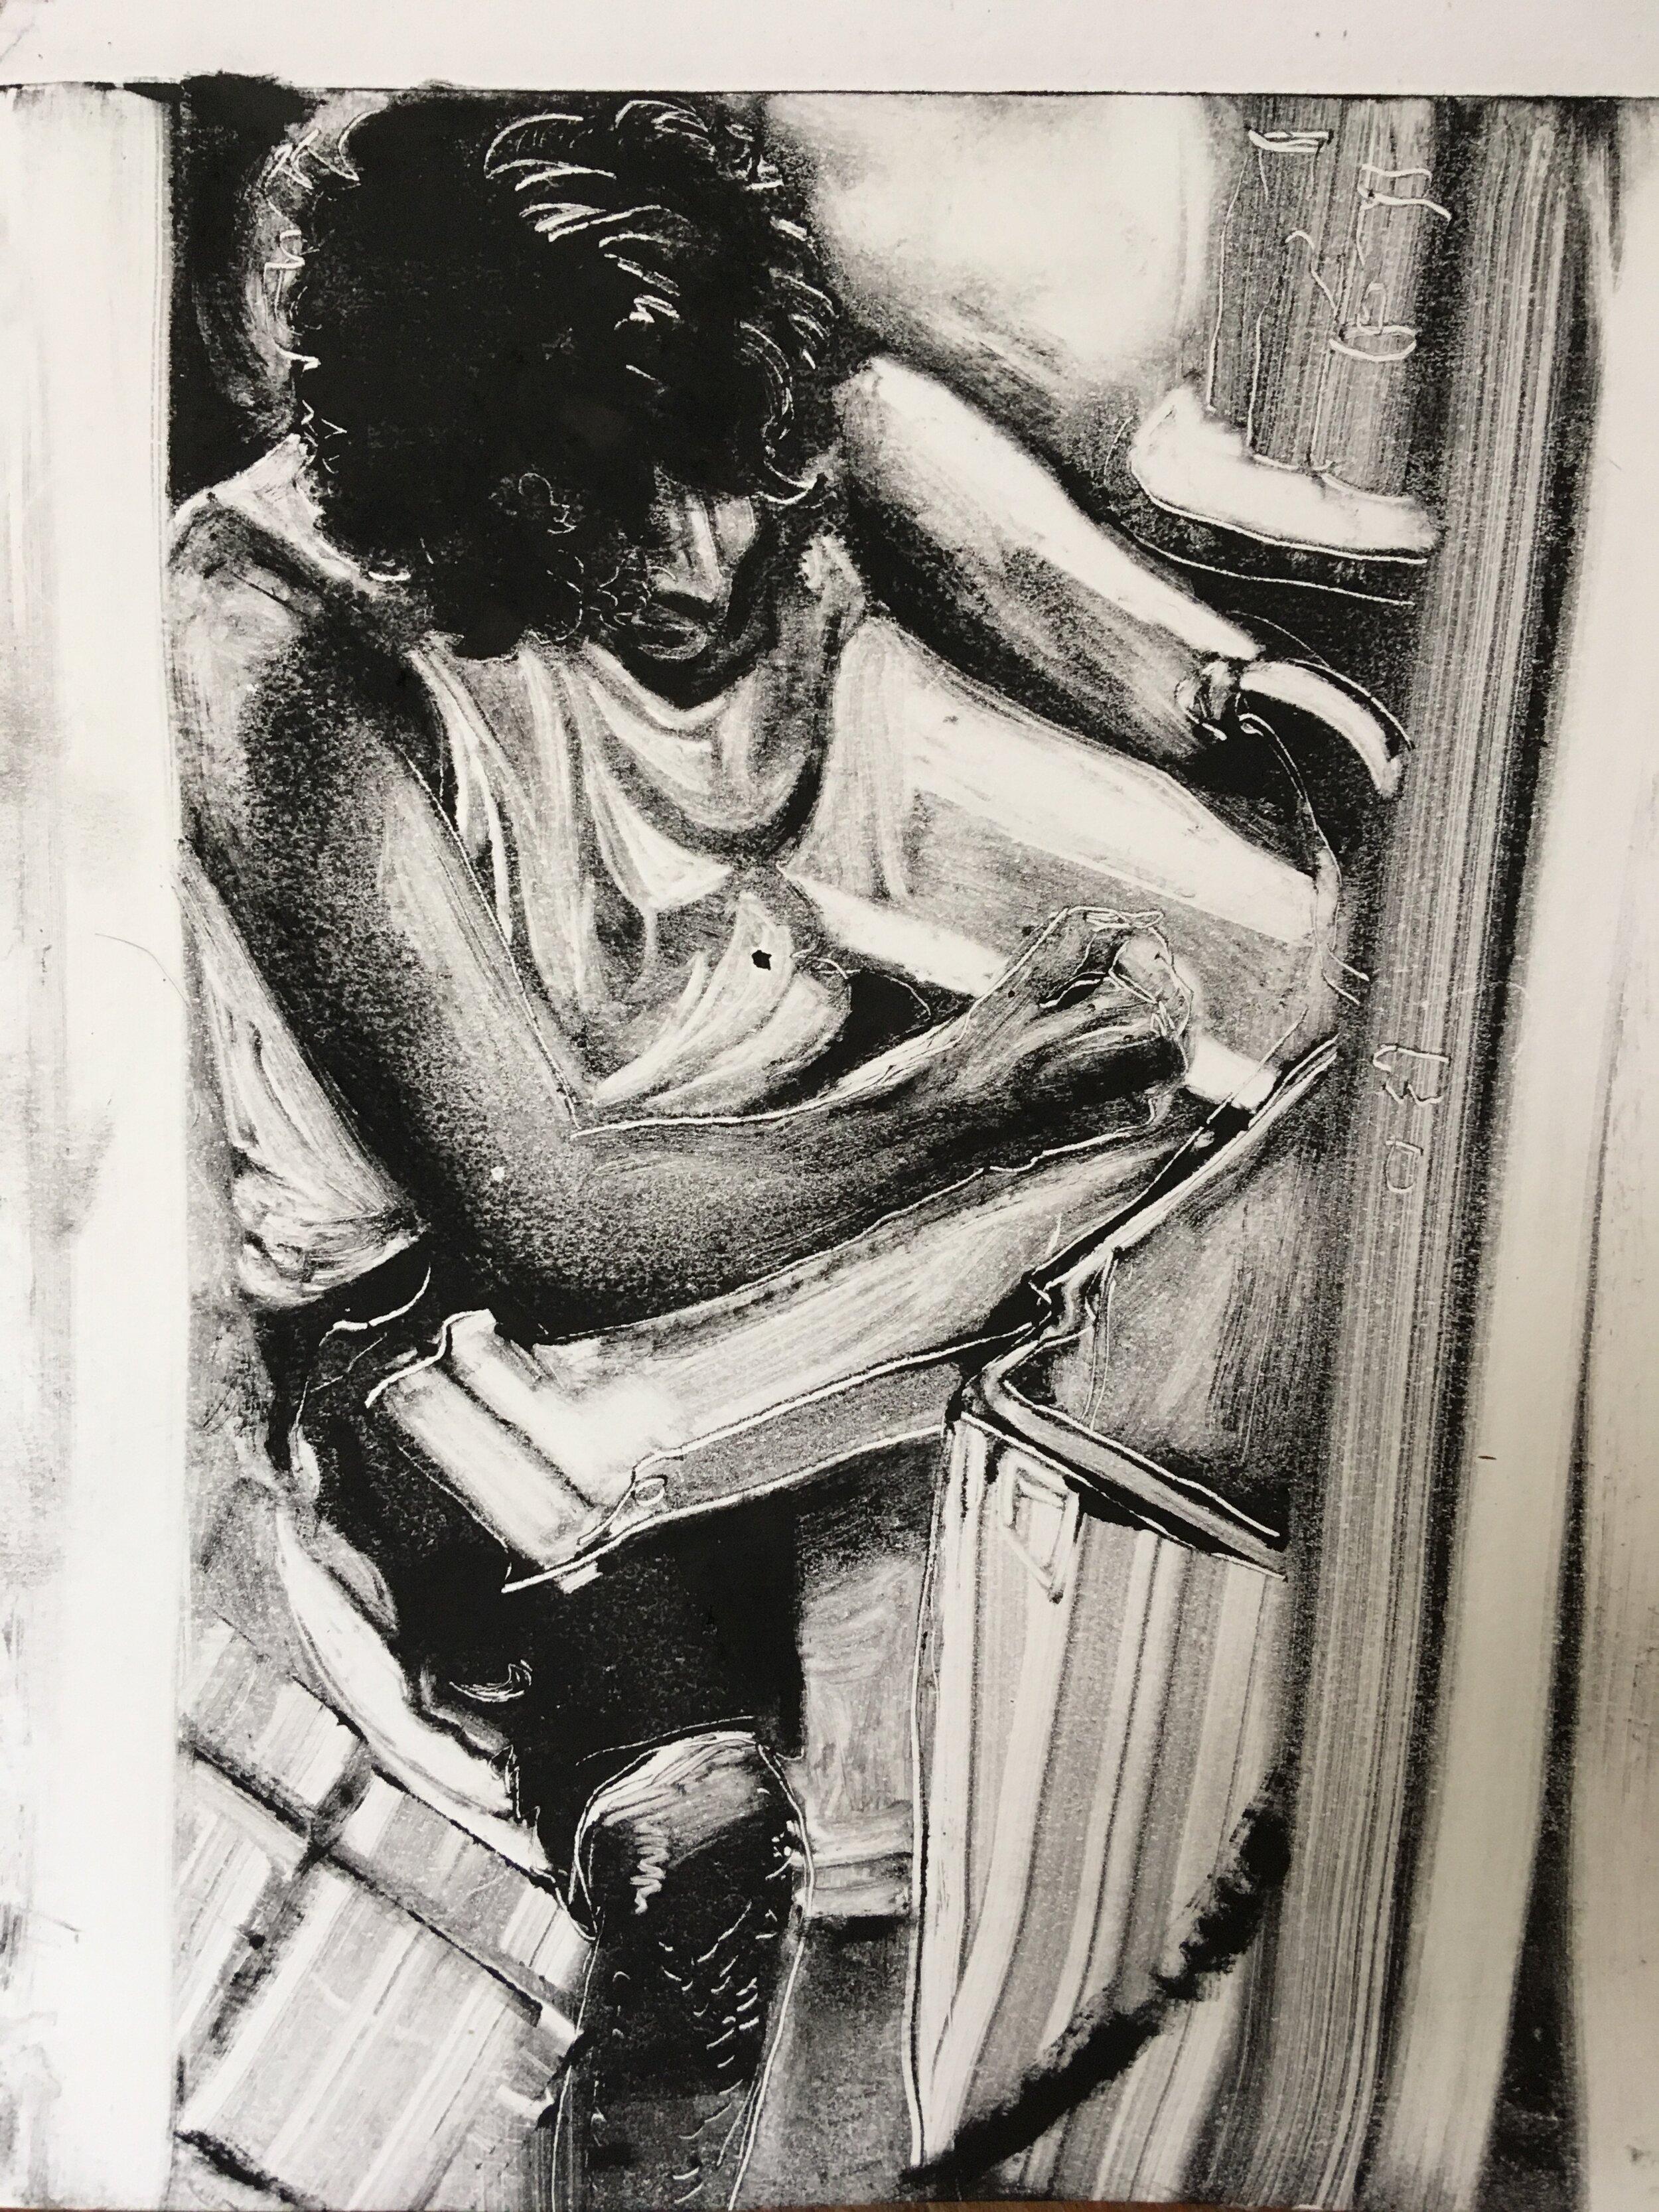 César fixing the toilet (2019), Monoprint on Paper, 11"x14"